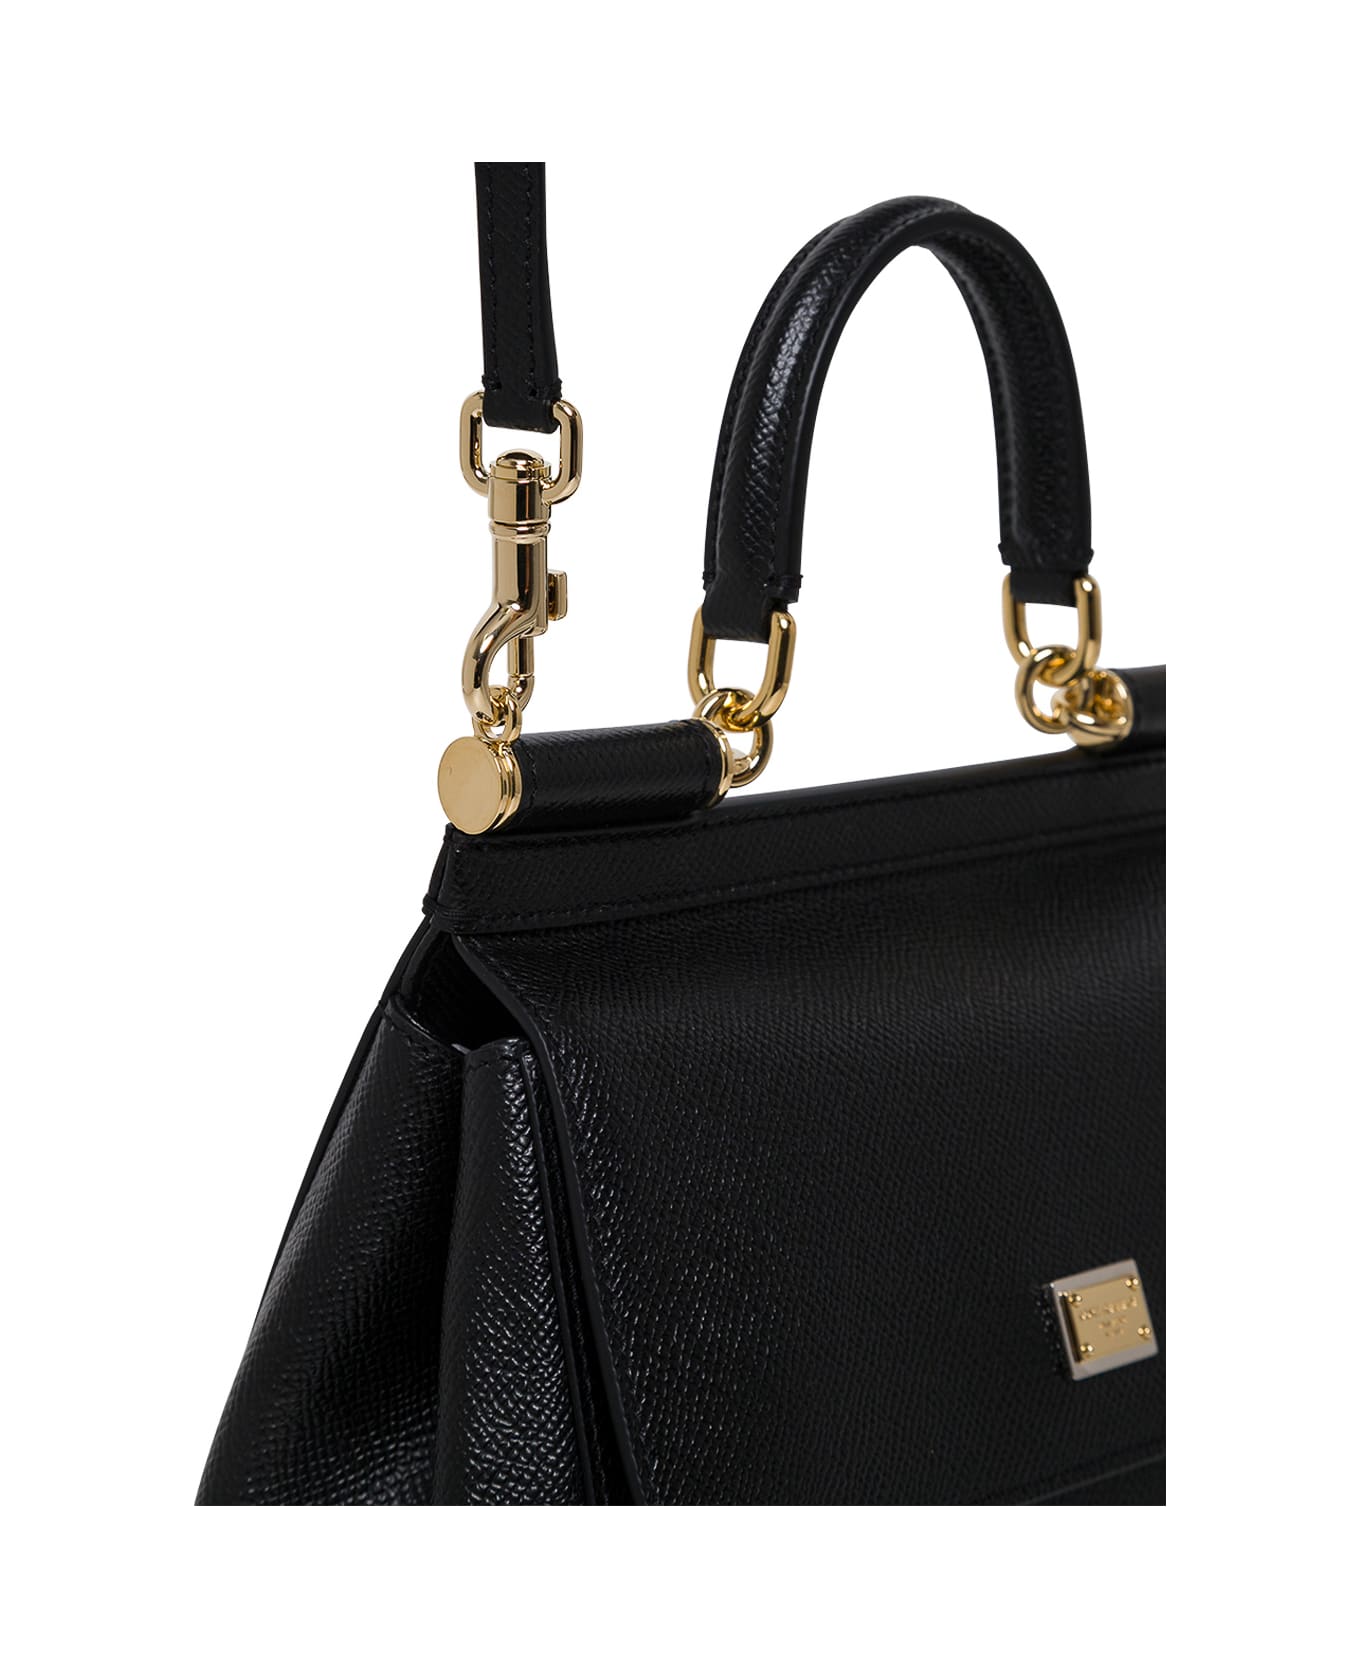 Dolce & Gabbana Woman's Sicily Dauphine Leather Handbag - Black